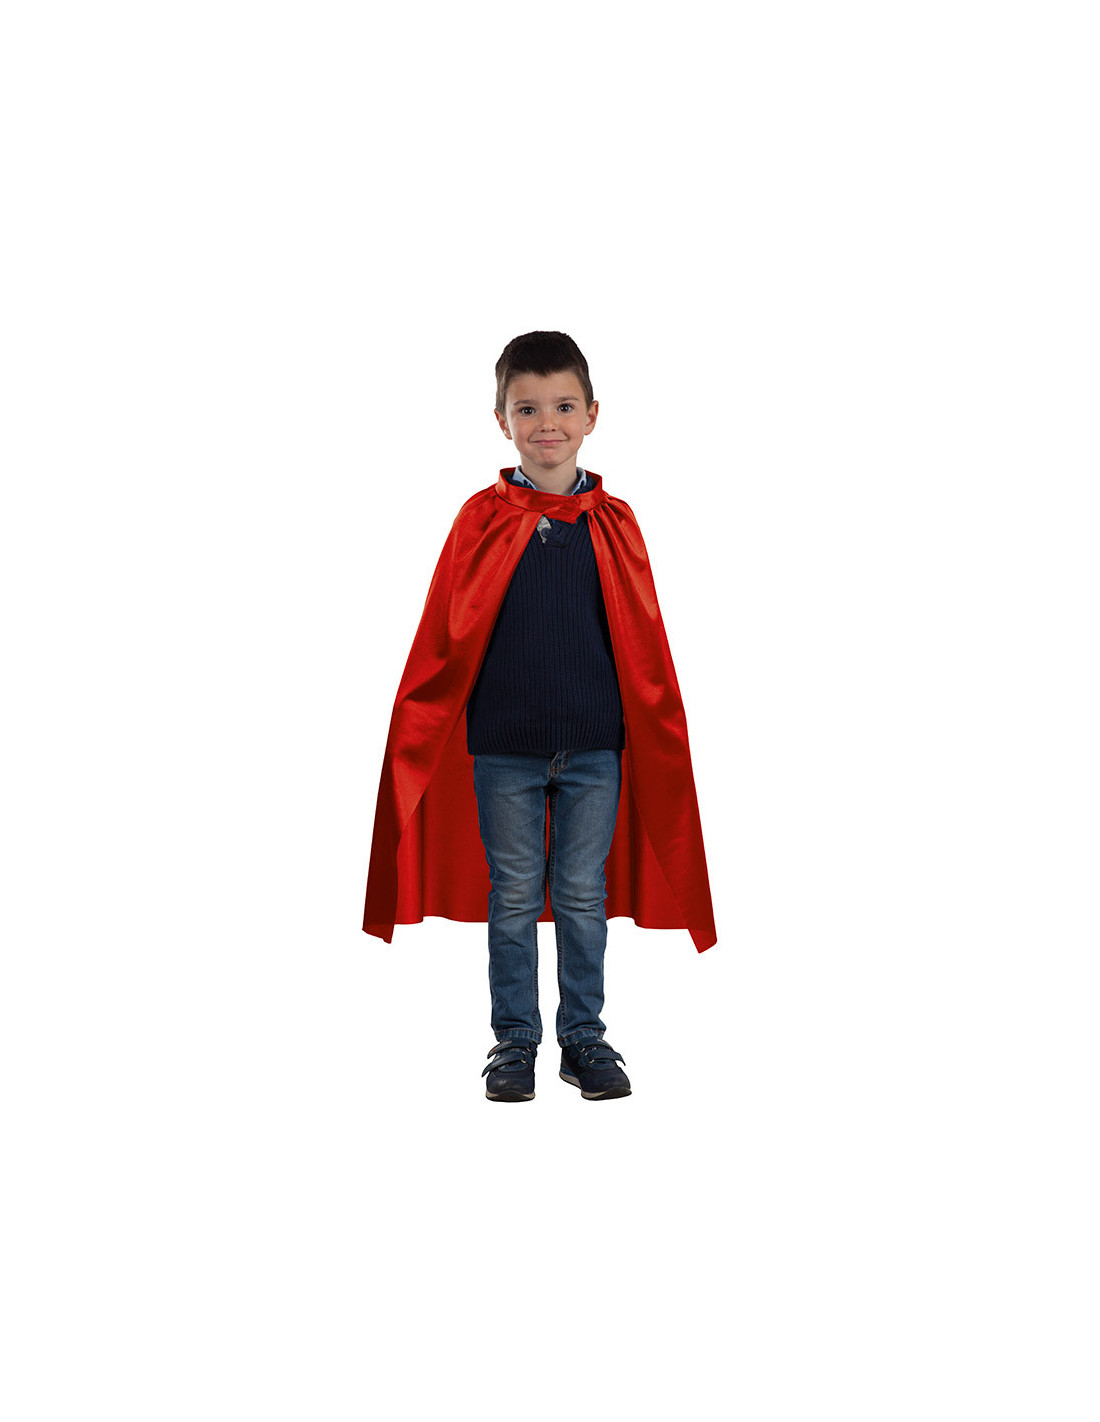 Memorizar par superficial Capa Superhéroe infantil - Envío en 24h|Comprar en Disfraces Bacanal